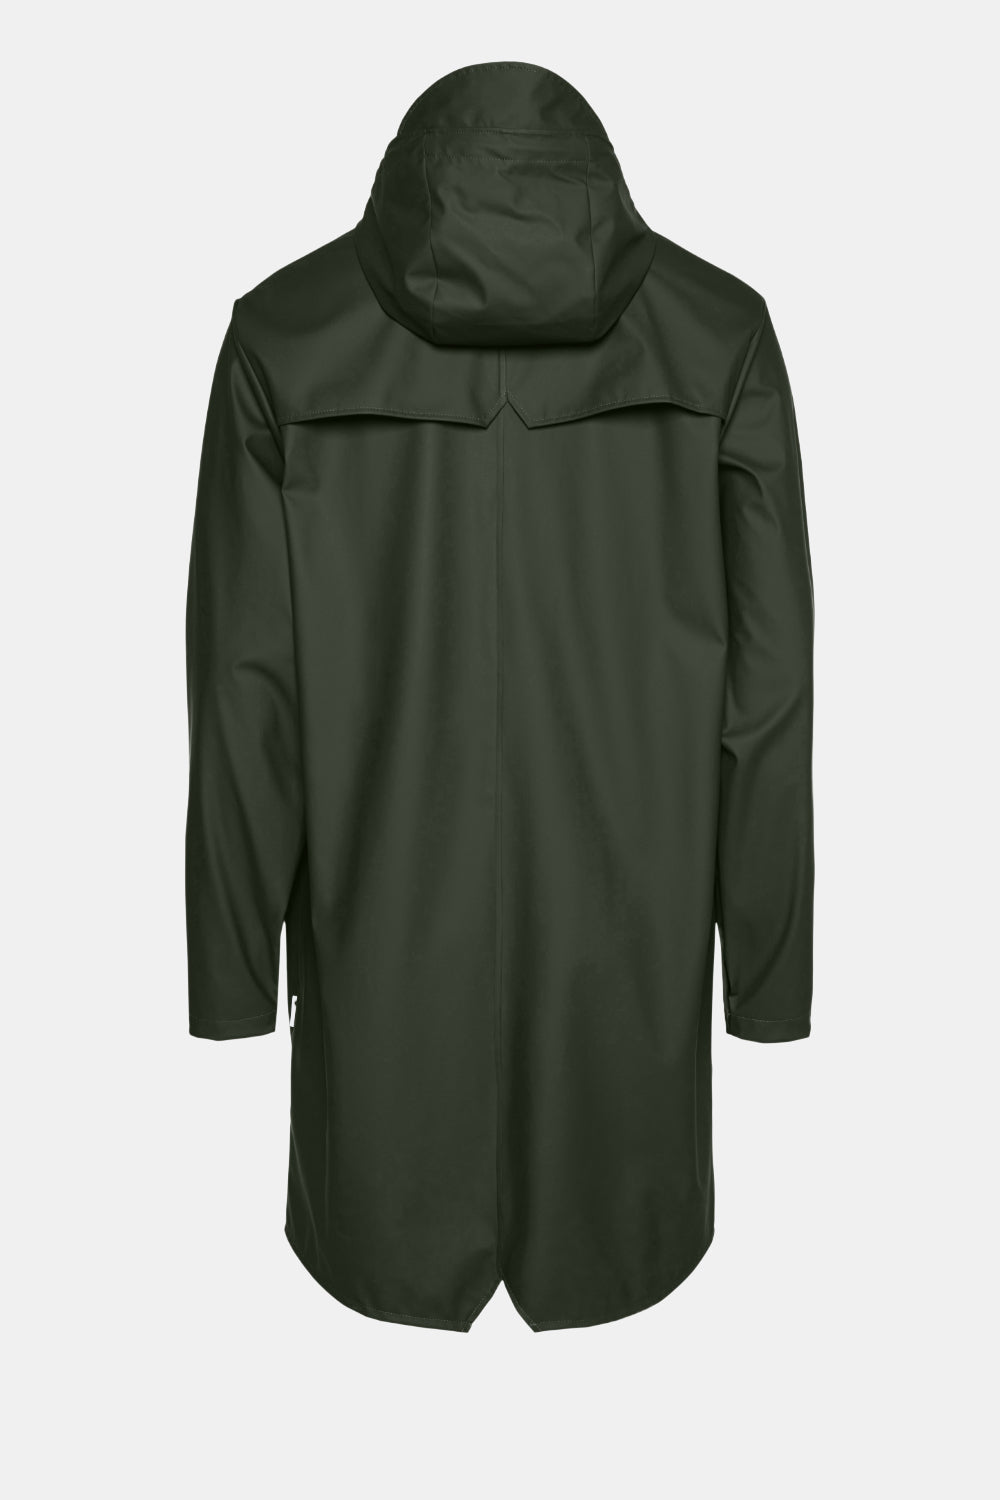 Rains Long Jacket (Green)